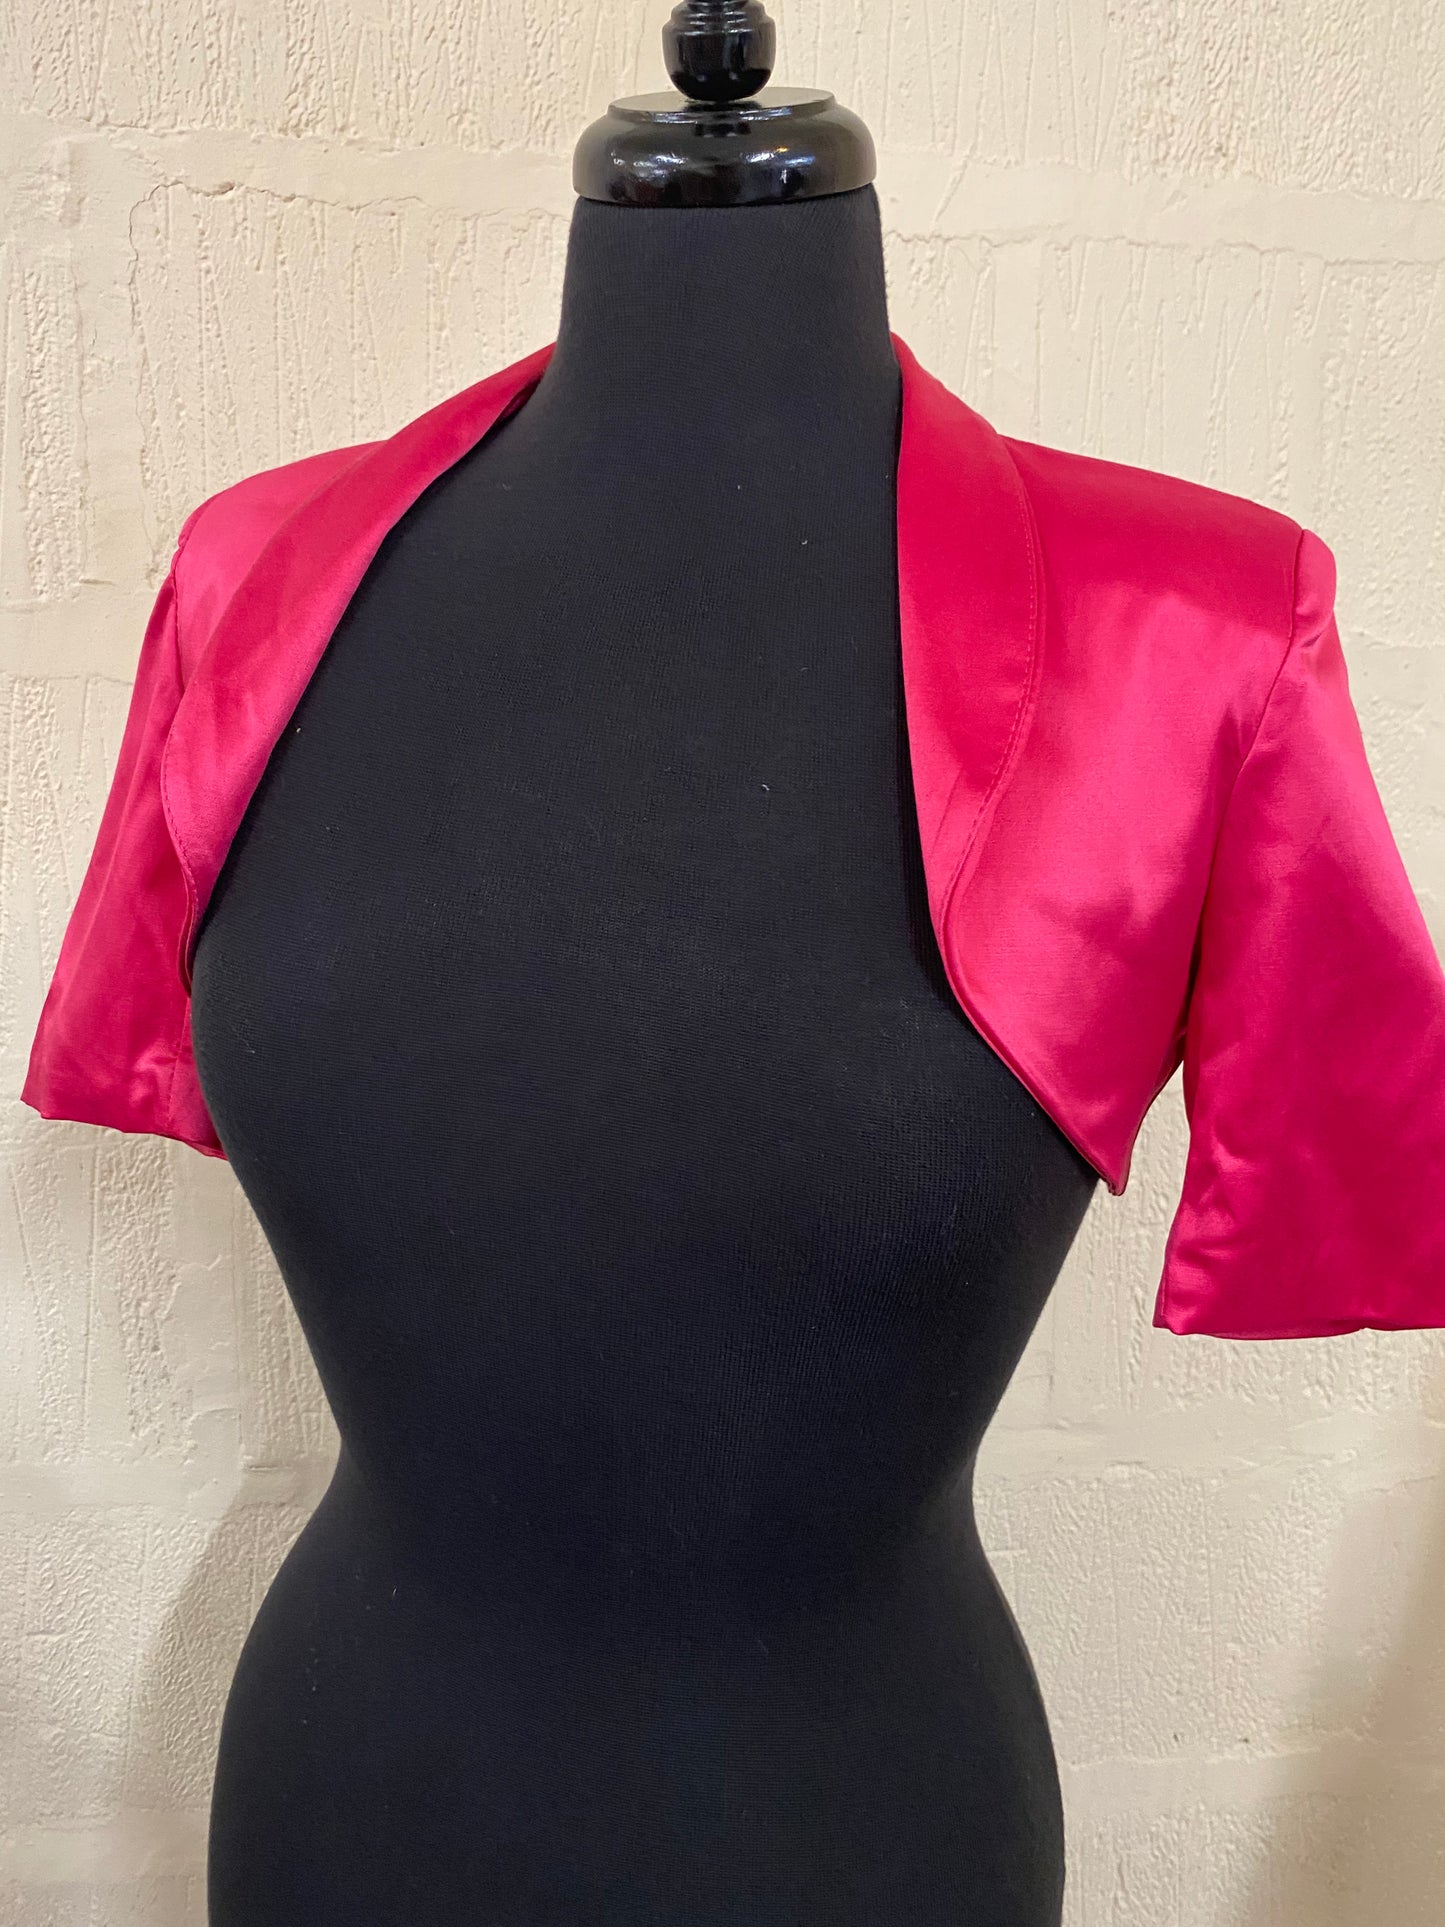 Vintage 1950s Style Fuchsia Pink Bolero Jacket Size 6-8